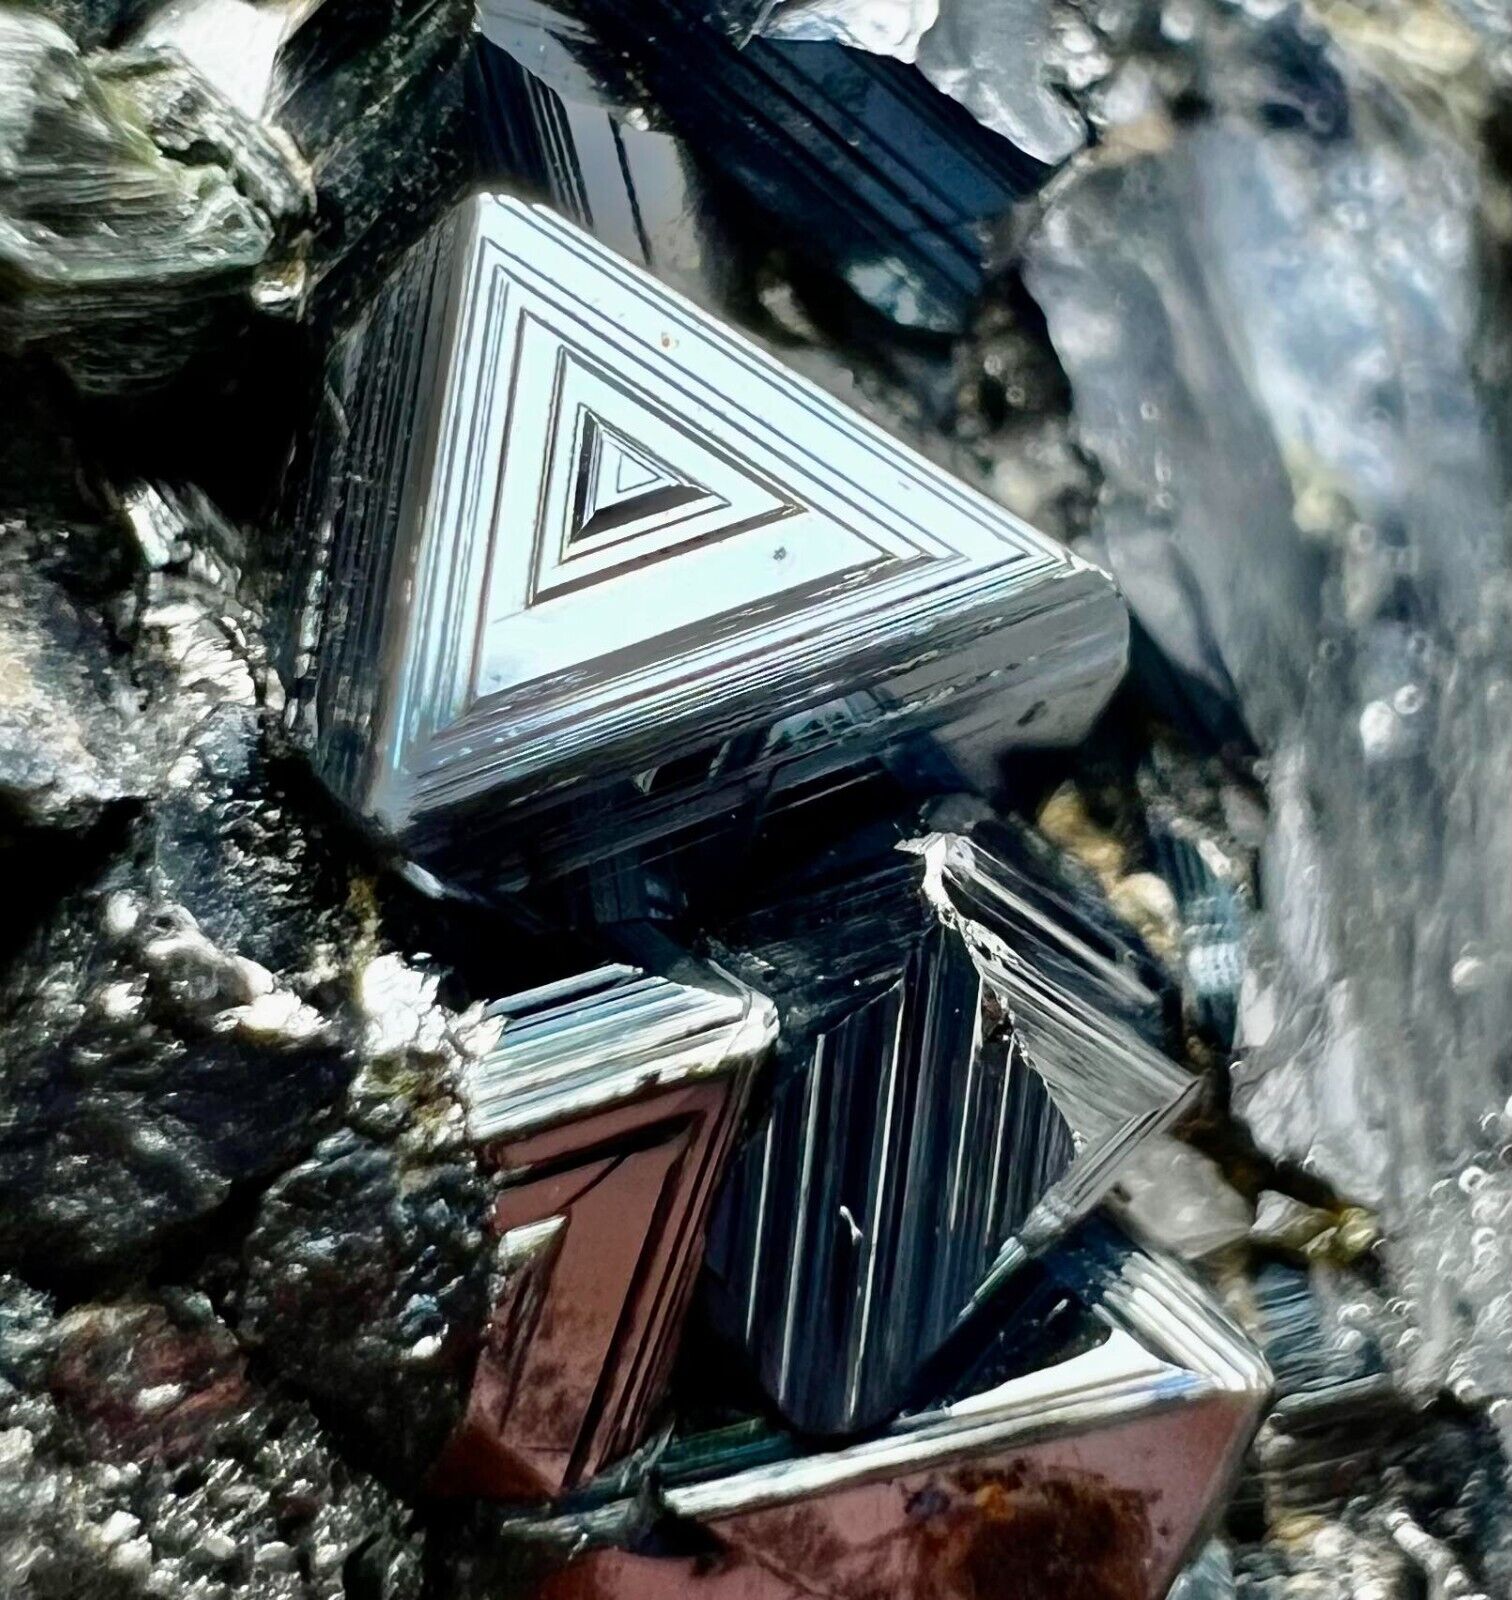 184 GR. Full & Well Terminated Magnetite Crystals Cluster On Matrix @ AFG